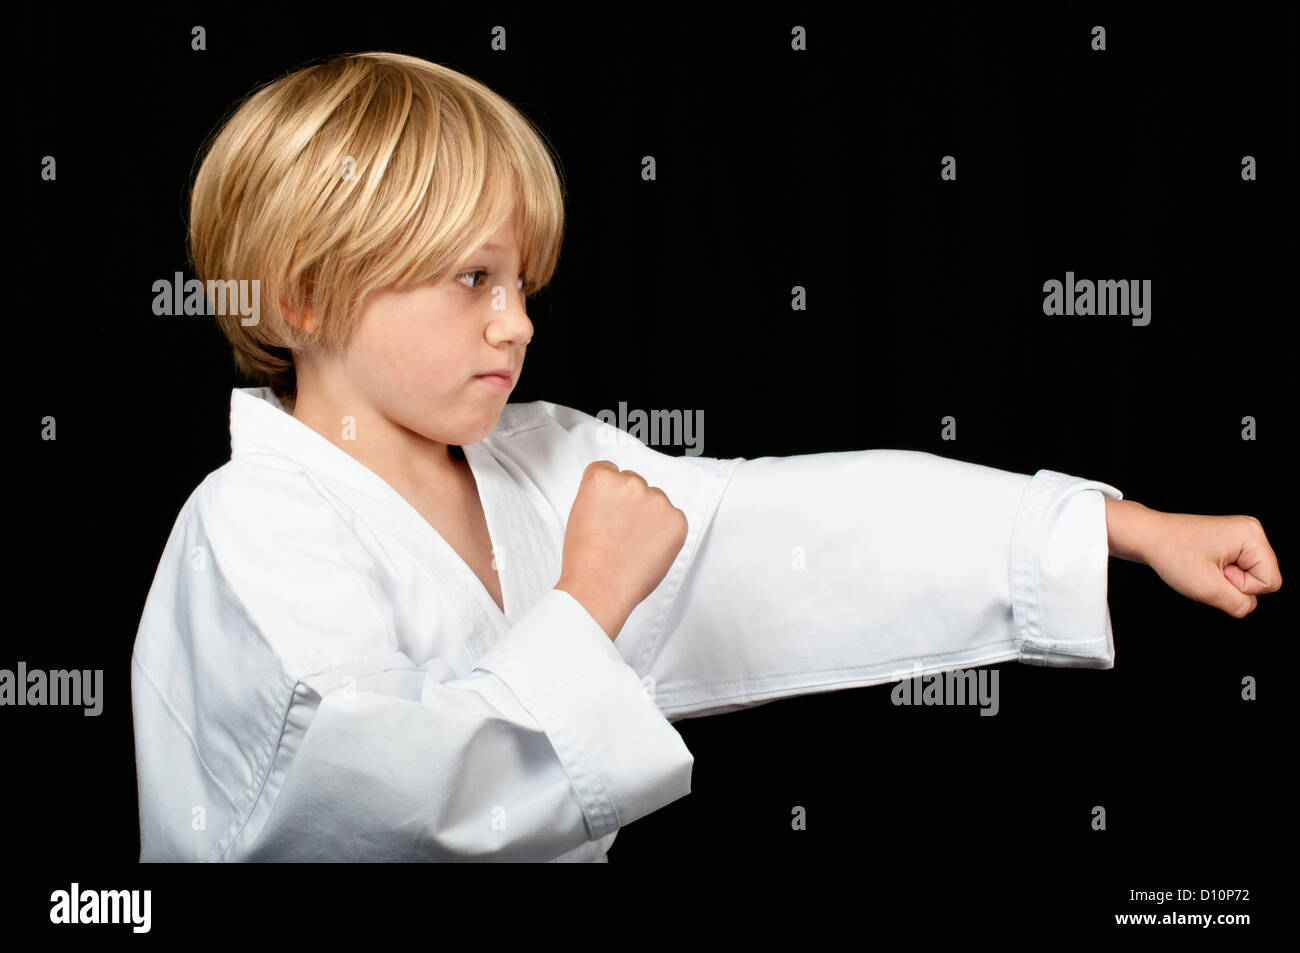 Karate punch Stock Photo